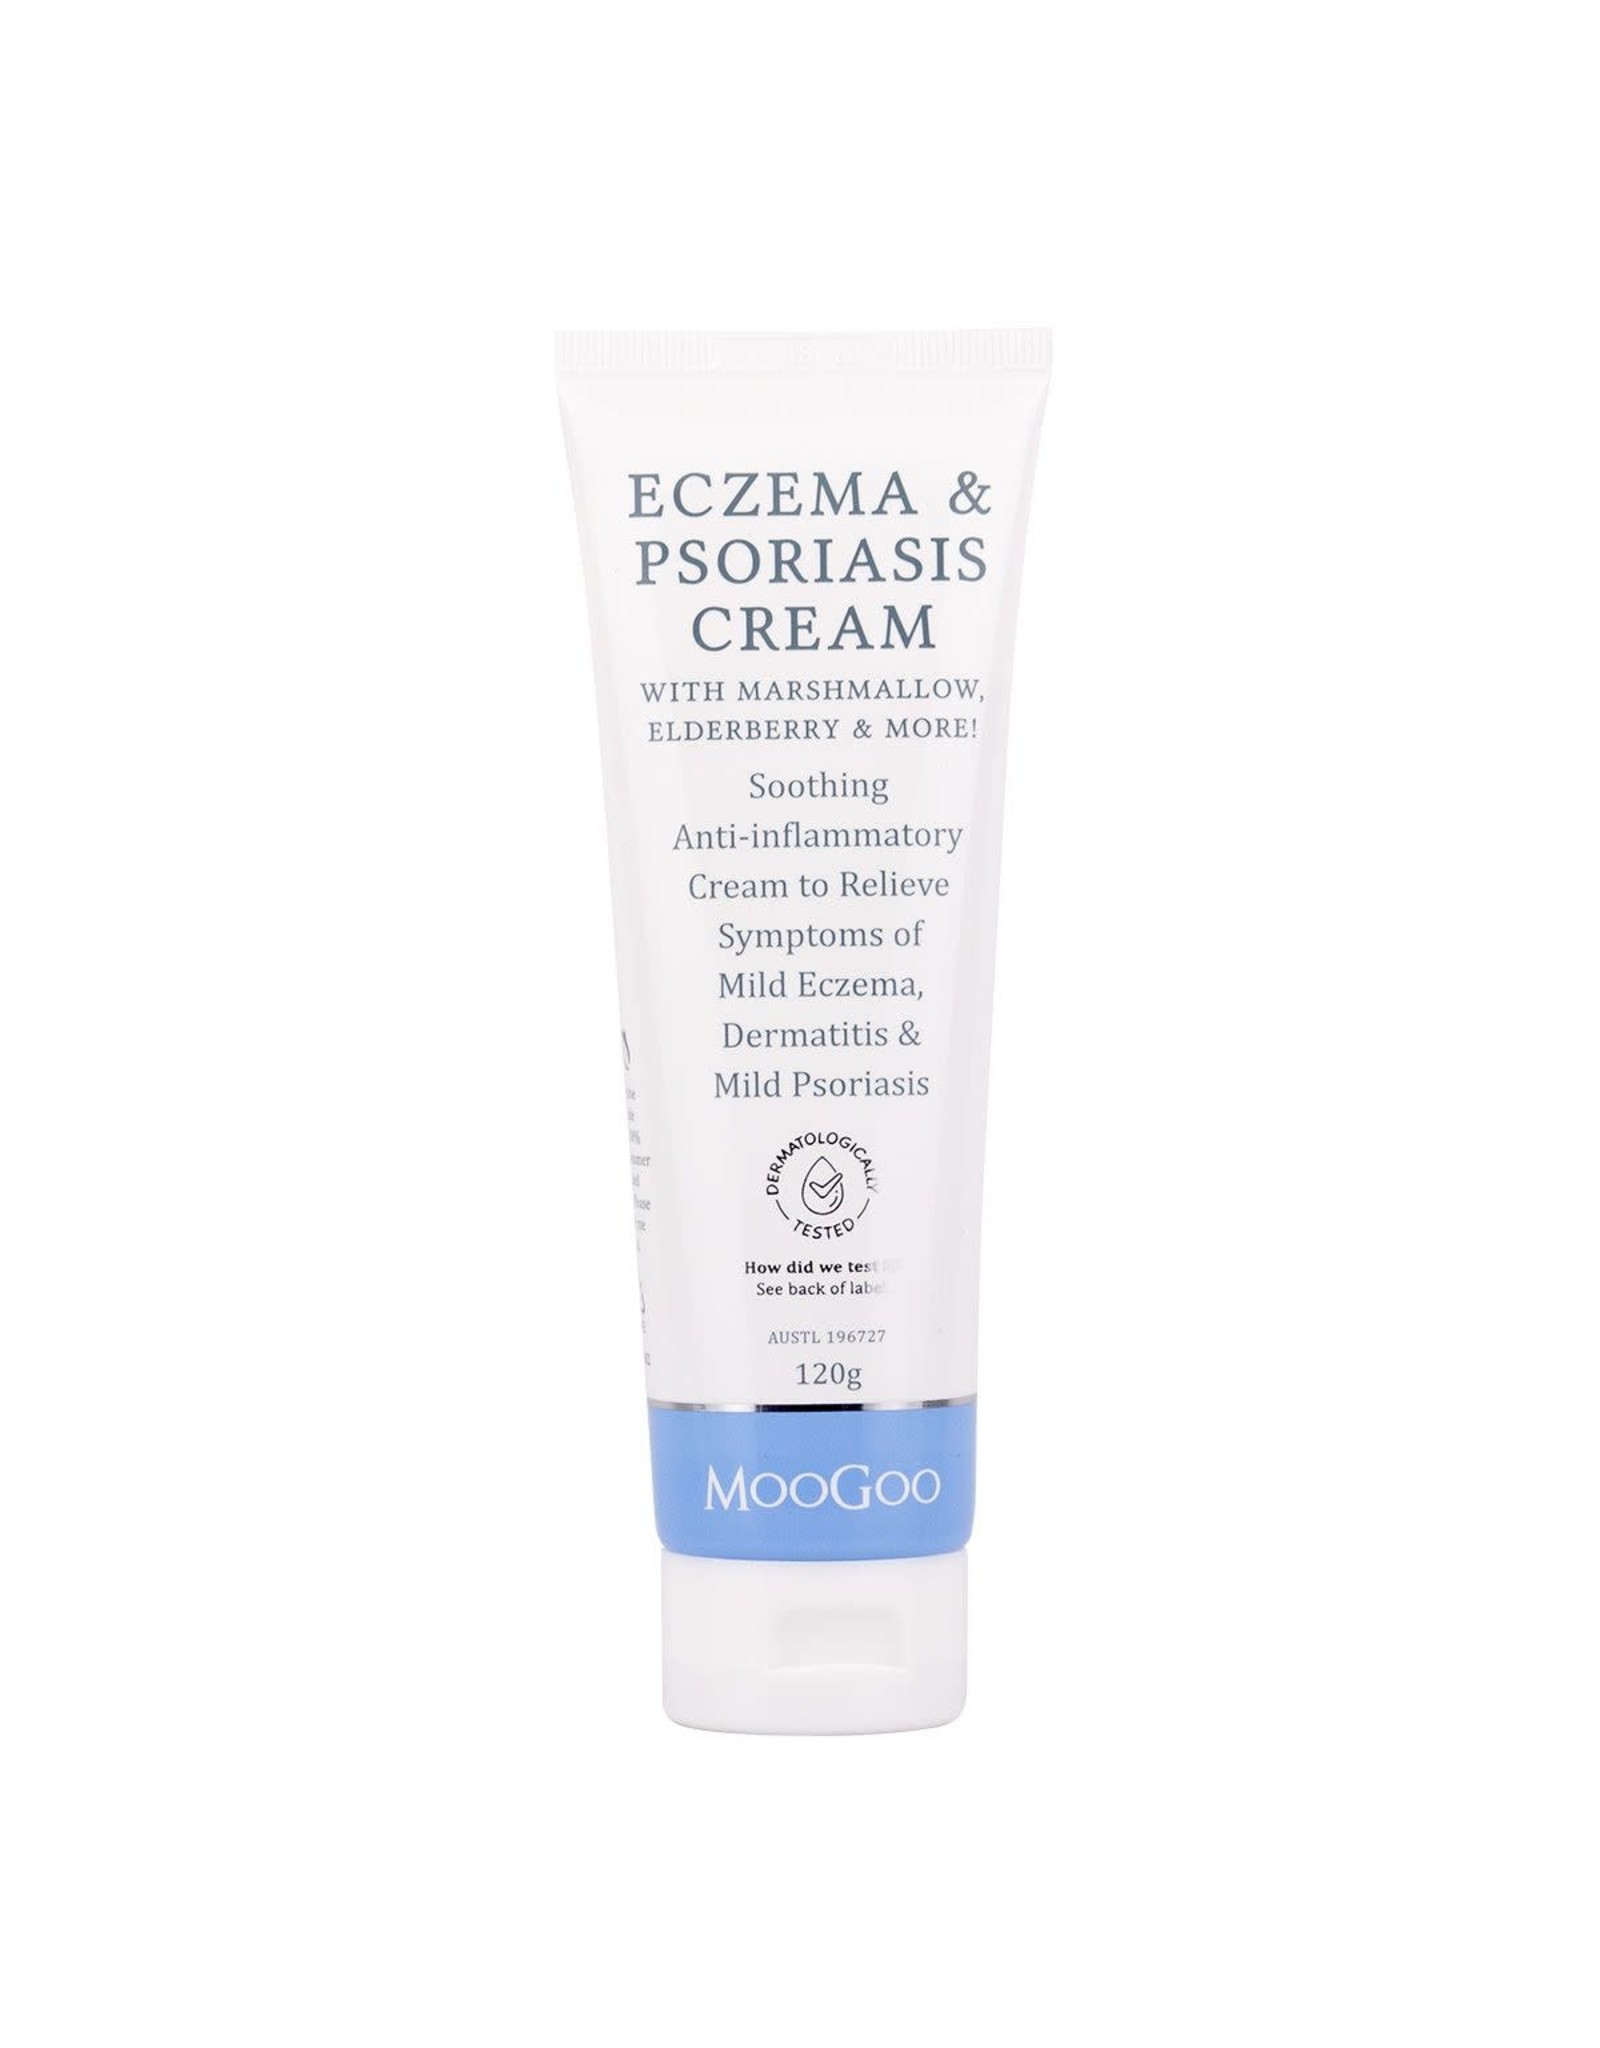 MooGoo Eczema & Psoriasis Cream with Marshmallow, Elderberry & More 120g